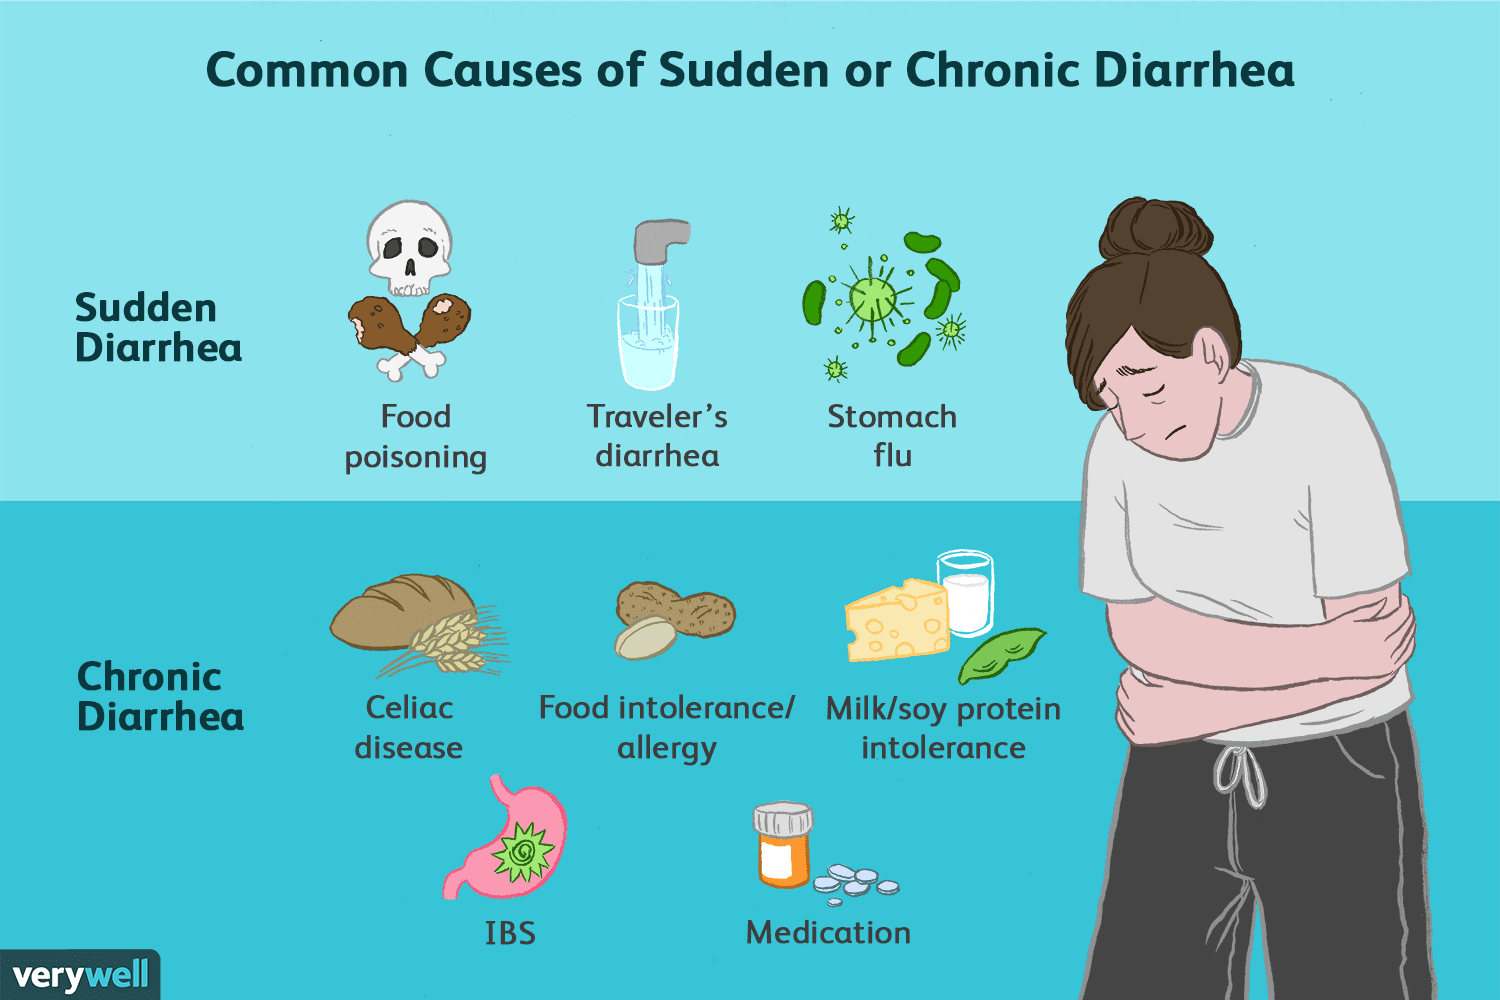 Diarrhea: Causes and Risk Factors